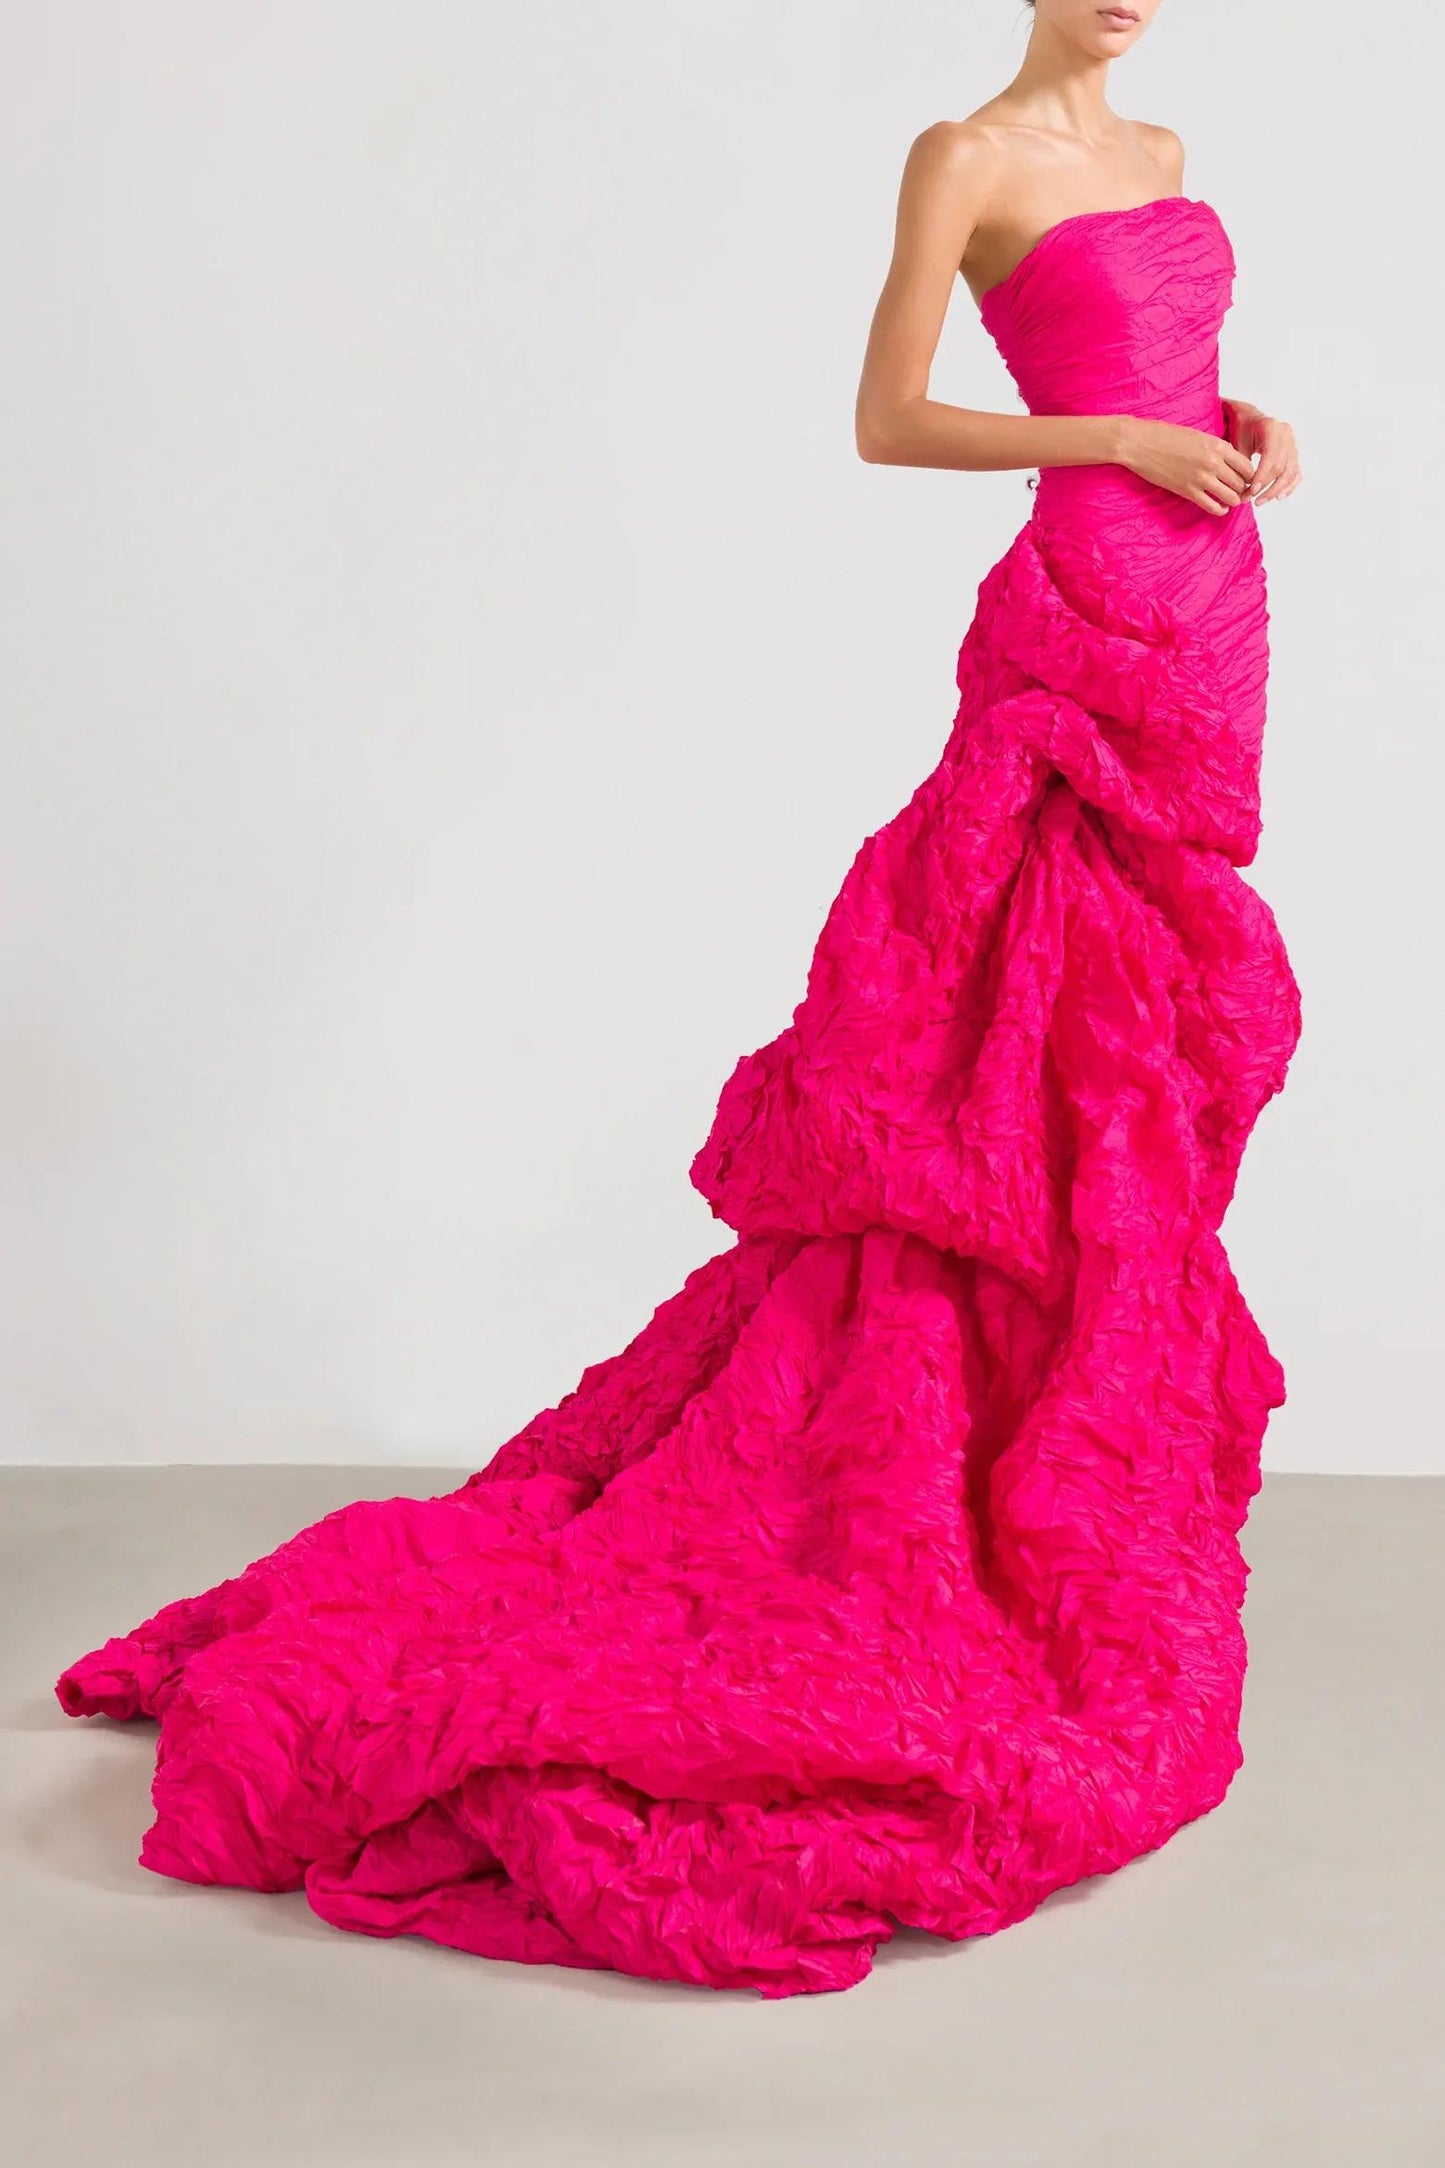 Crushed Taffeta Couture Dress